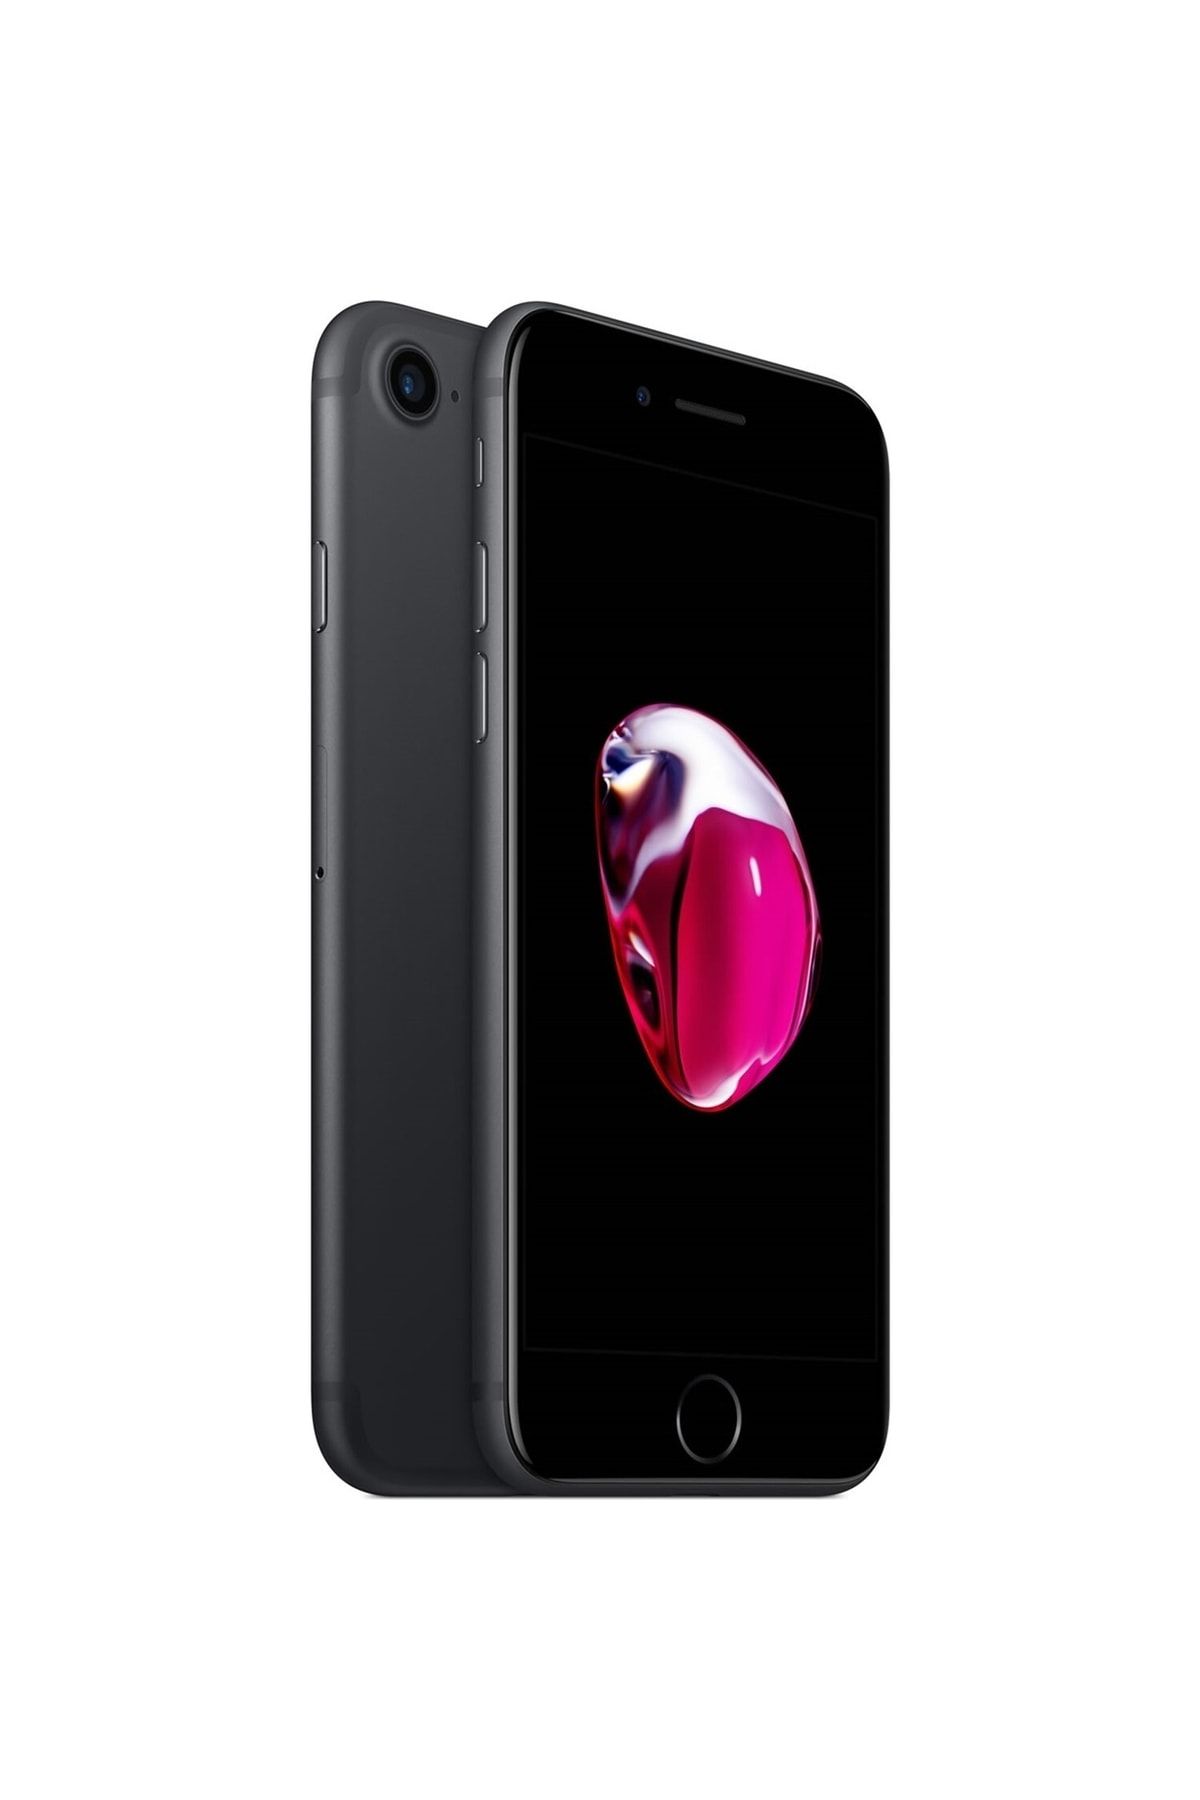 Apple Yenilenmiş iPhone 7 128 GB Siyah Cep Telefonu (12 Ay Garantili) - B Kalite